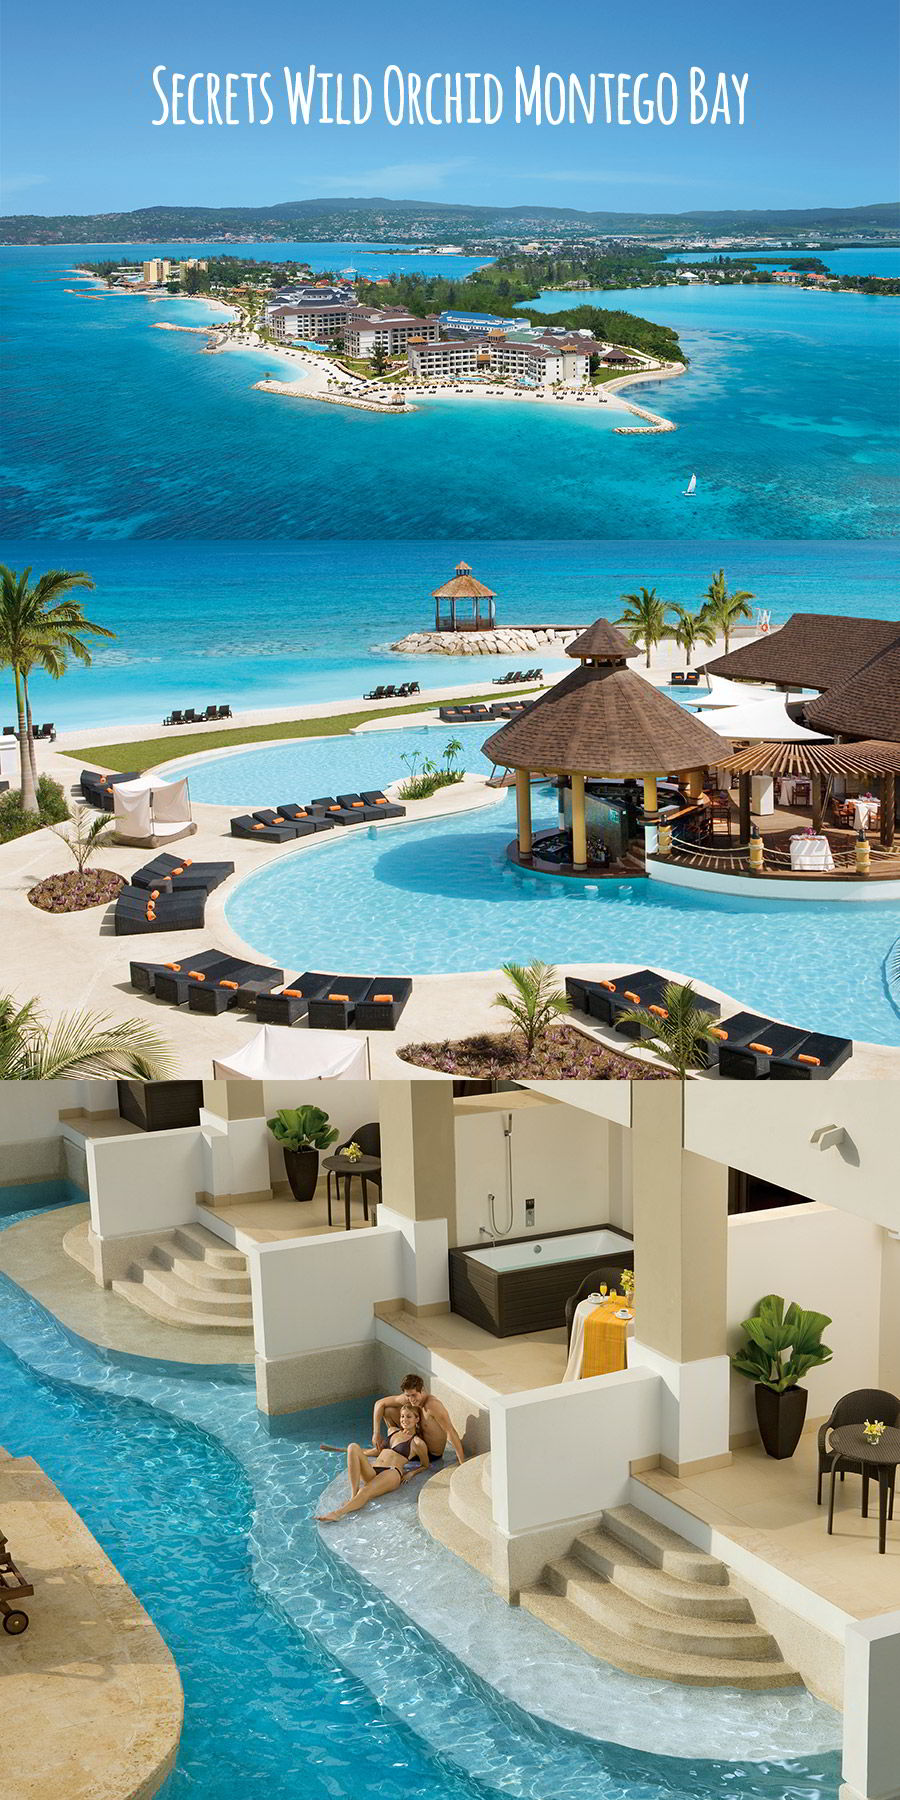 secrets resorts wild orchid montego bay jamaica destination wedding venue honymoon caribbean private island pool swim out suite couple